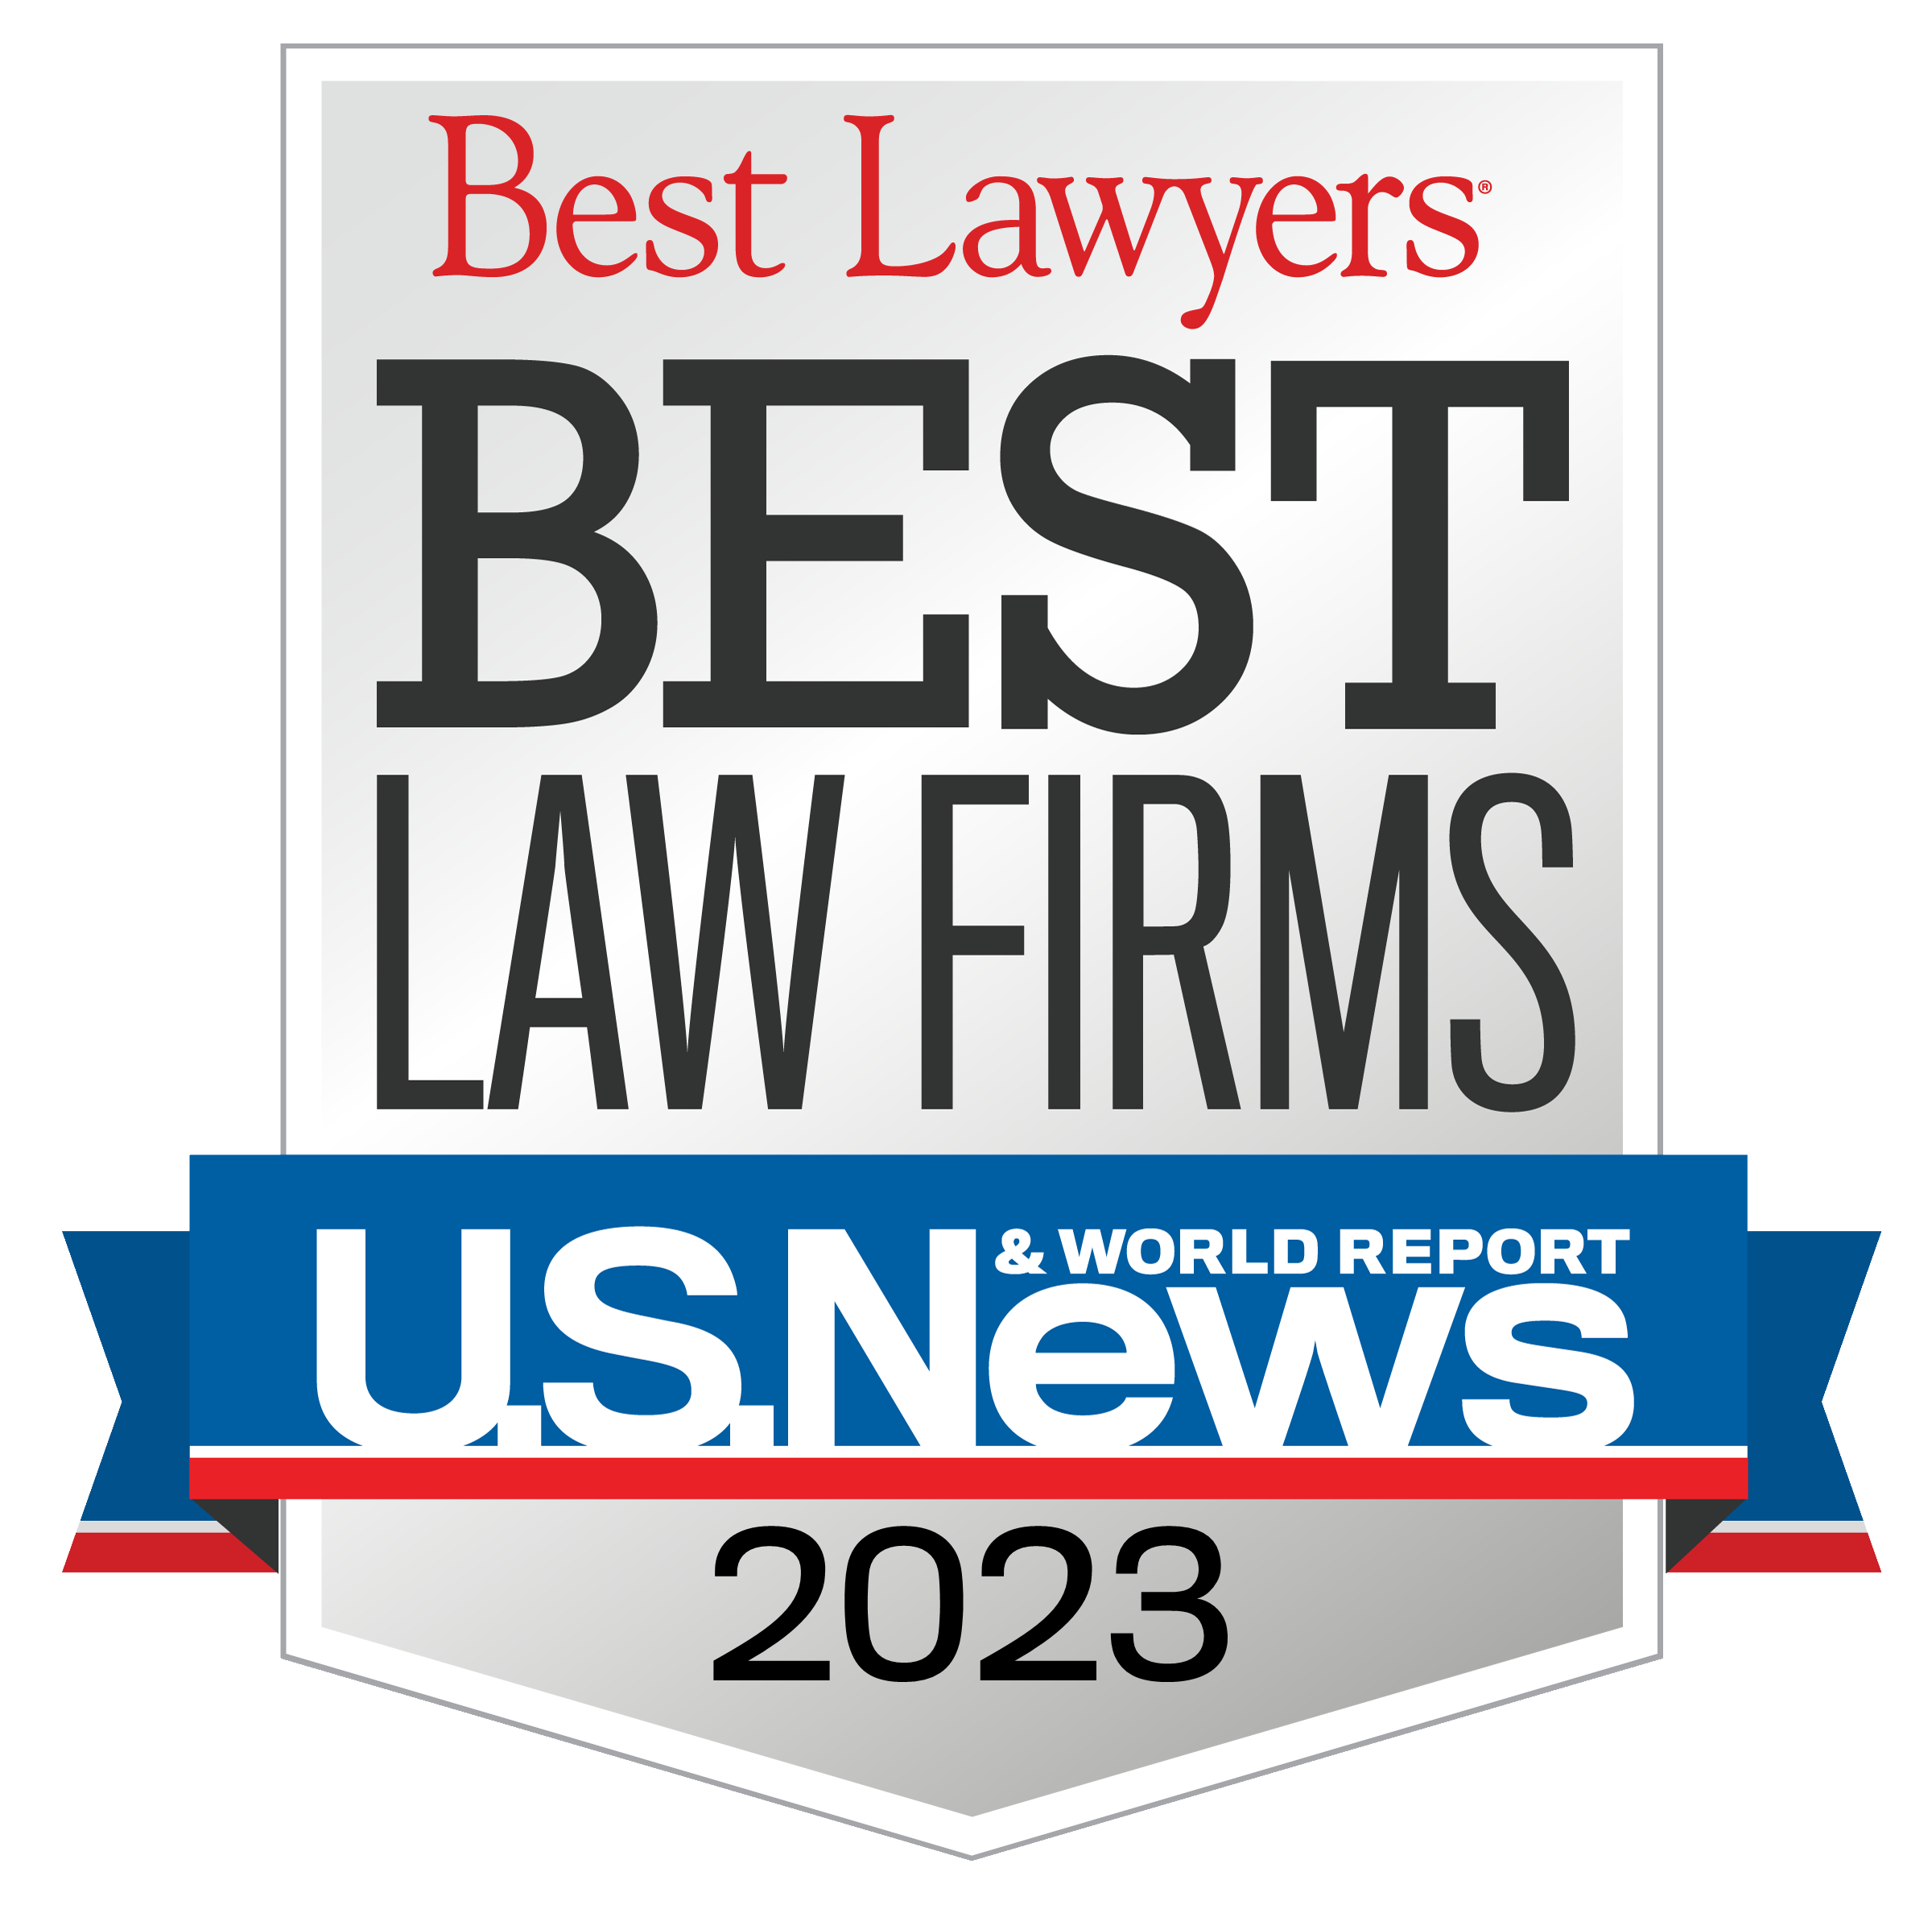 Best Lawyers Best Law Firms U.S. News & World Report